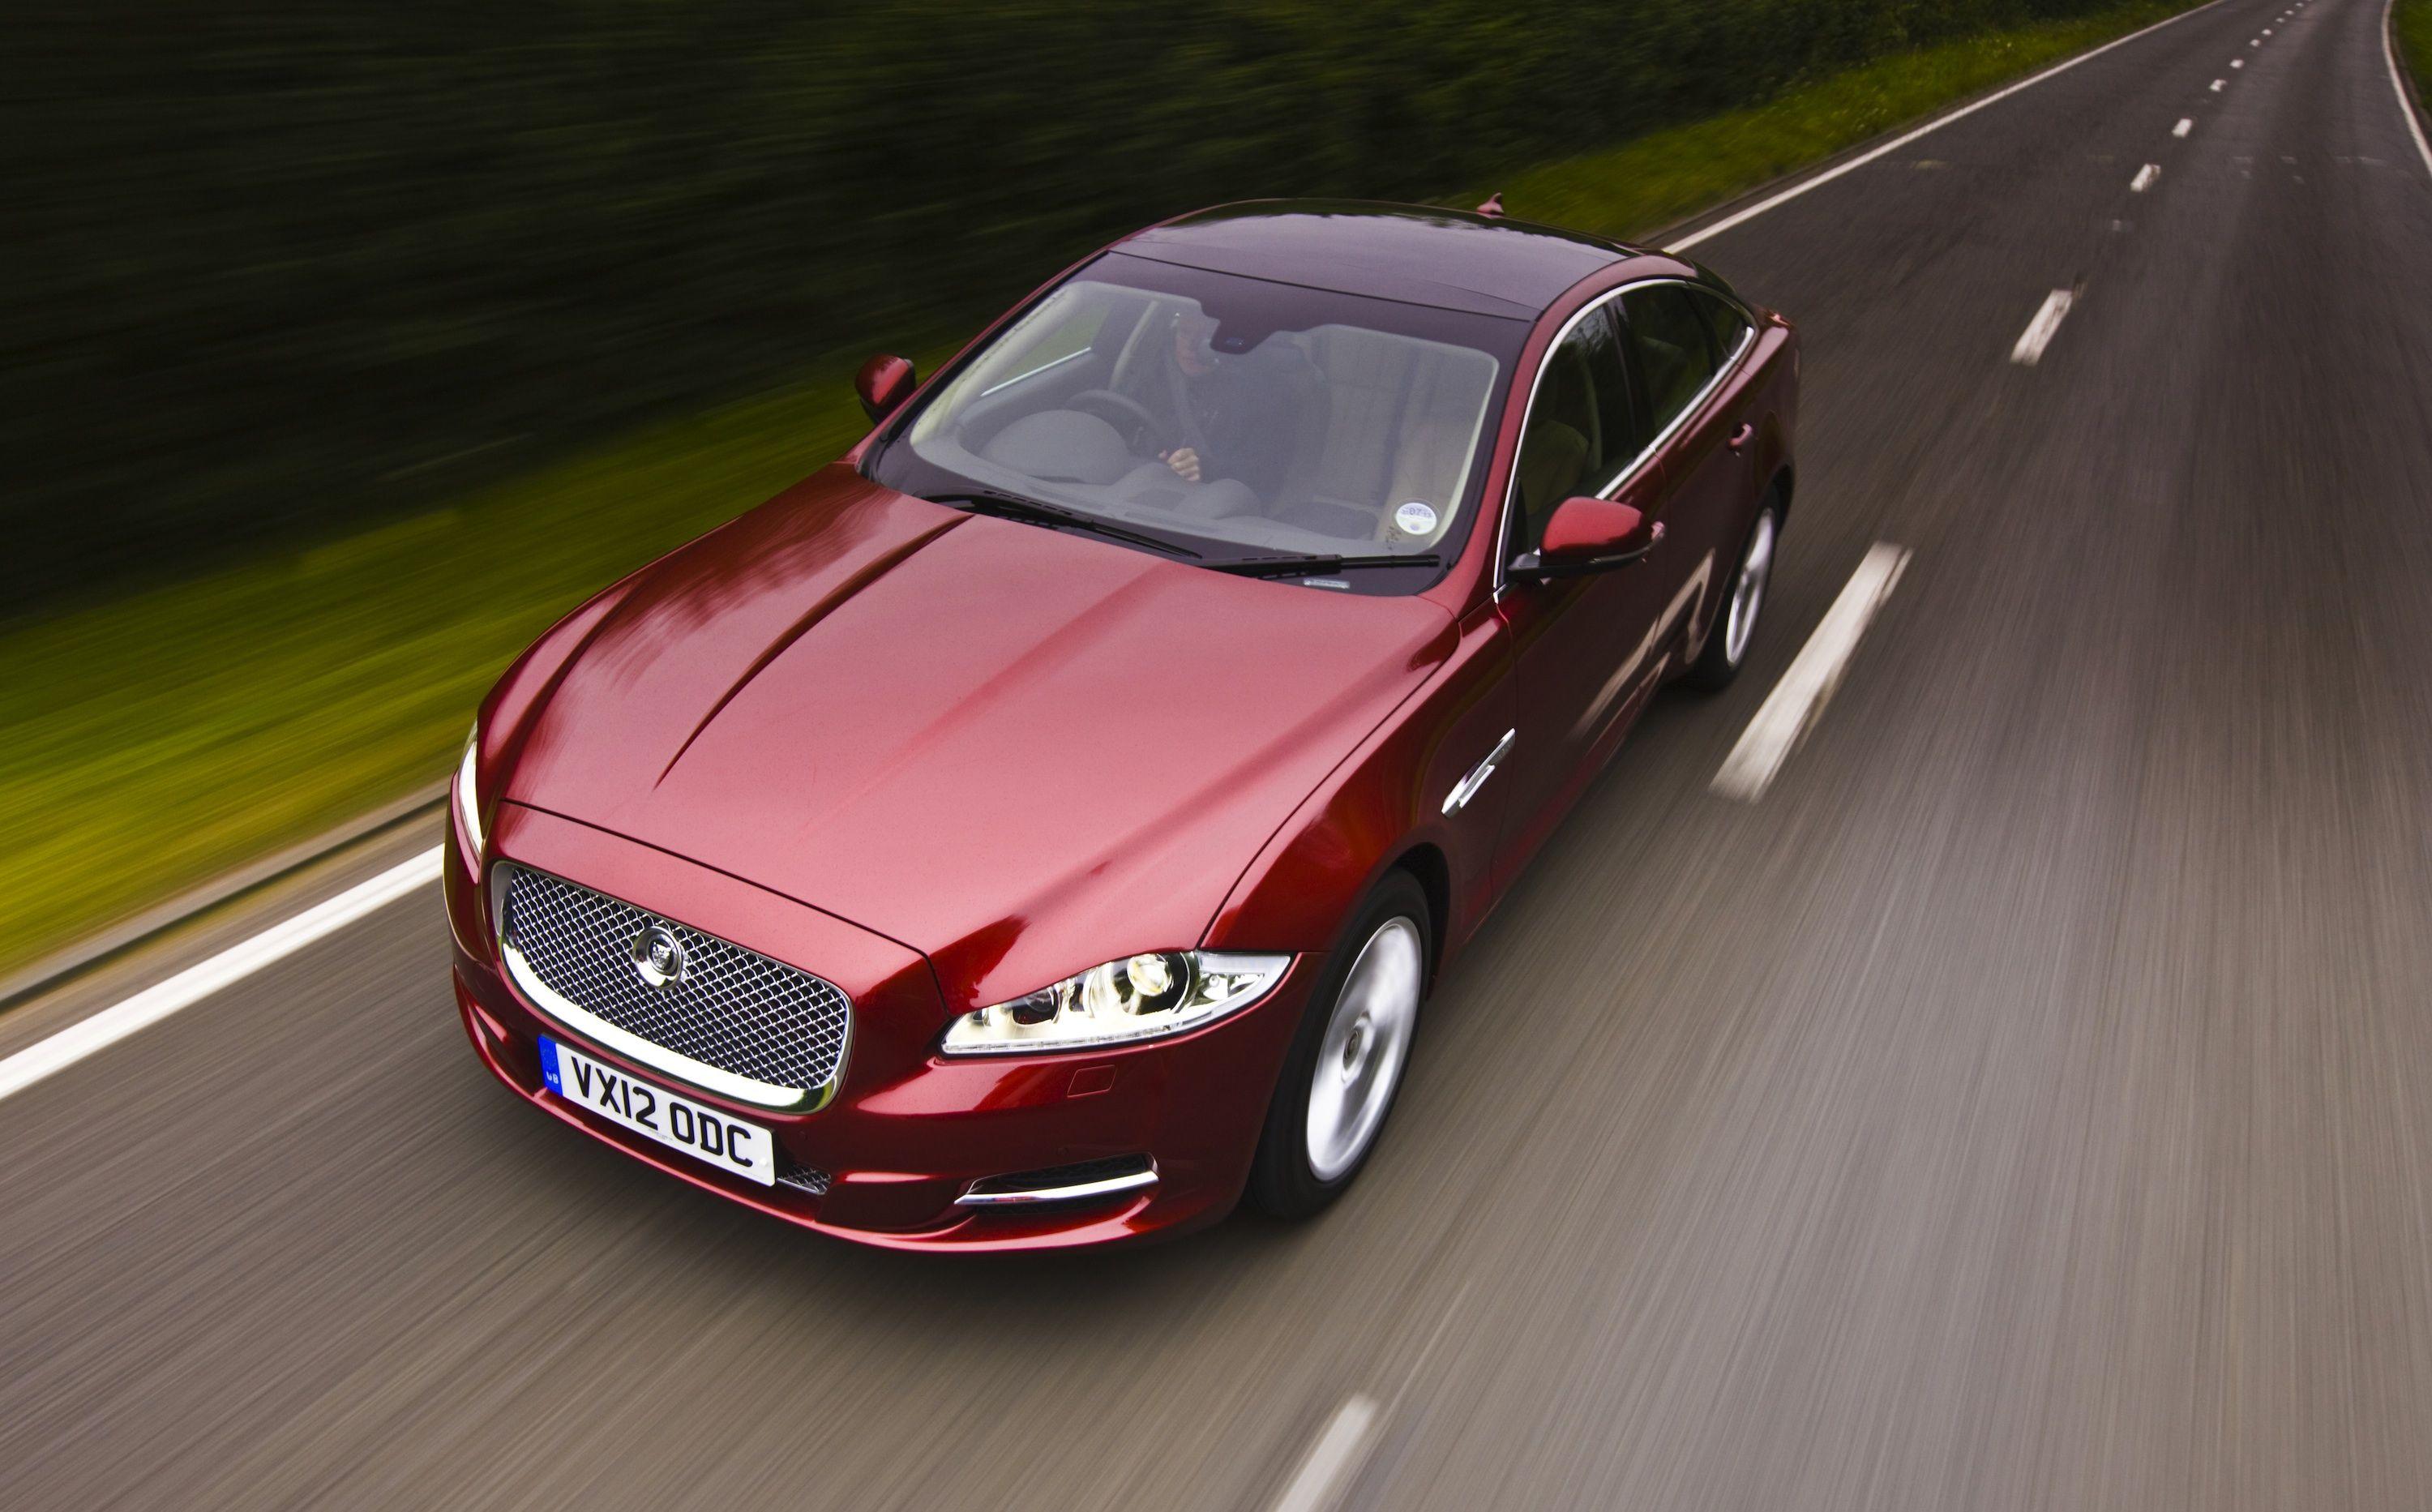 Desktop Image About Jag Jaguar Hot Cars And Galleries On Ree